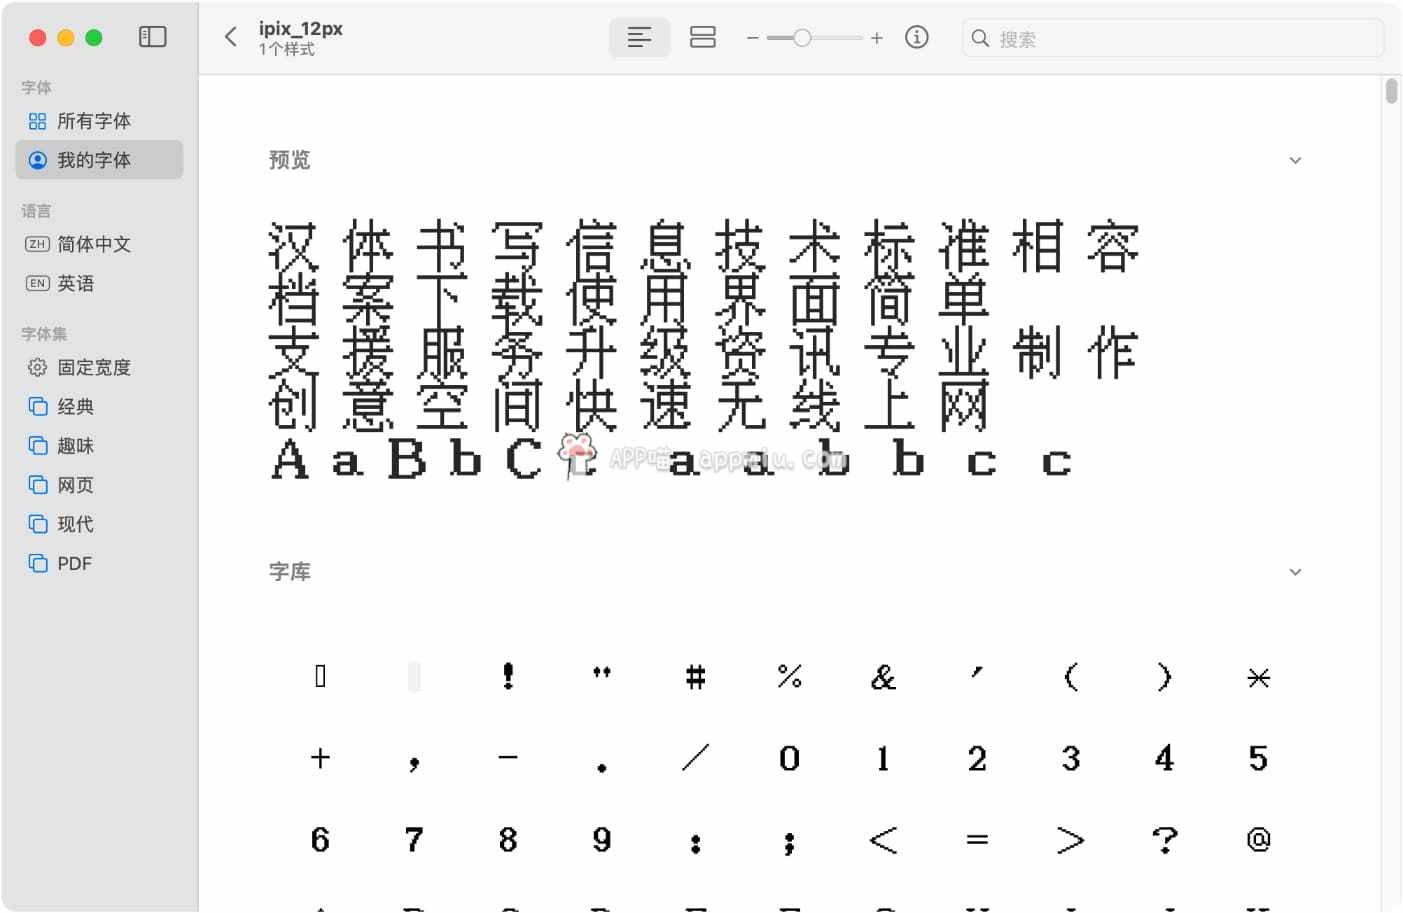 IPix(Chinese Pixel Font/ 中文像素字体)不可免费商用，注意！-APP喵-阿喵软件